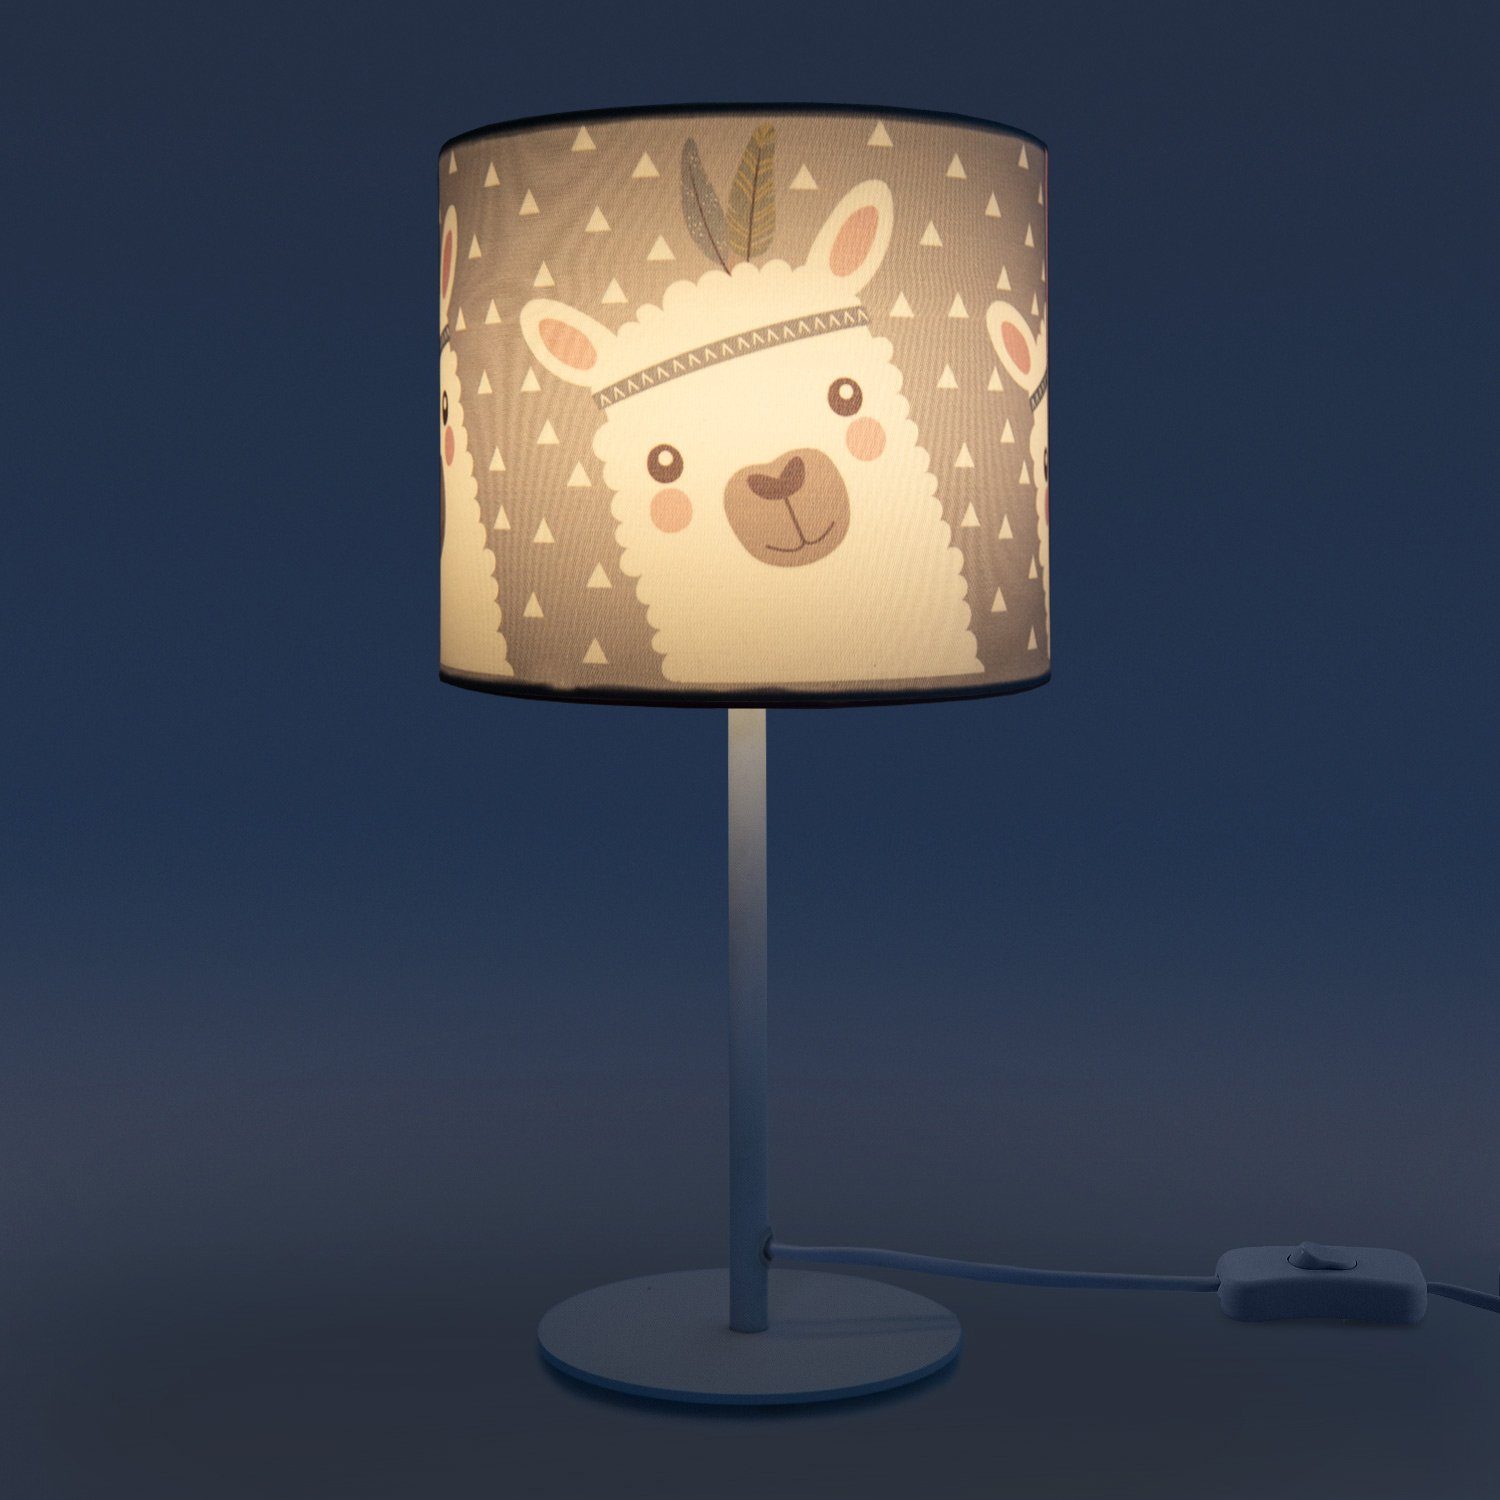 Paco Home Tischleuchte LED Kinderlampe Lama-Motiv, E14 Lampe ohne Kinderzimmer 214, Tischleuchte Ela Leuchtmittel, Mit